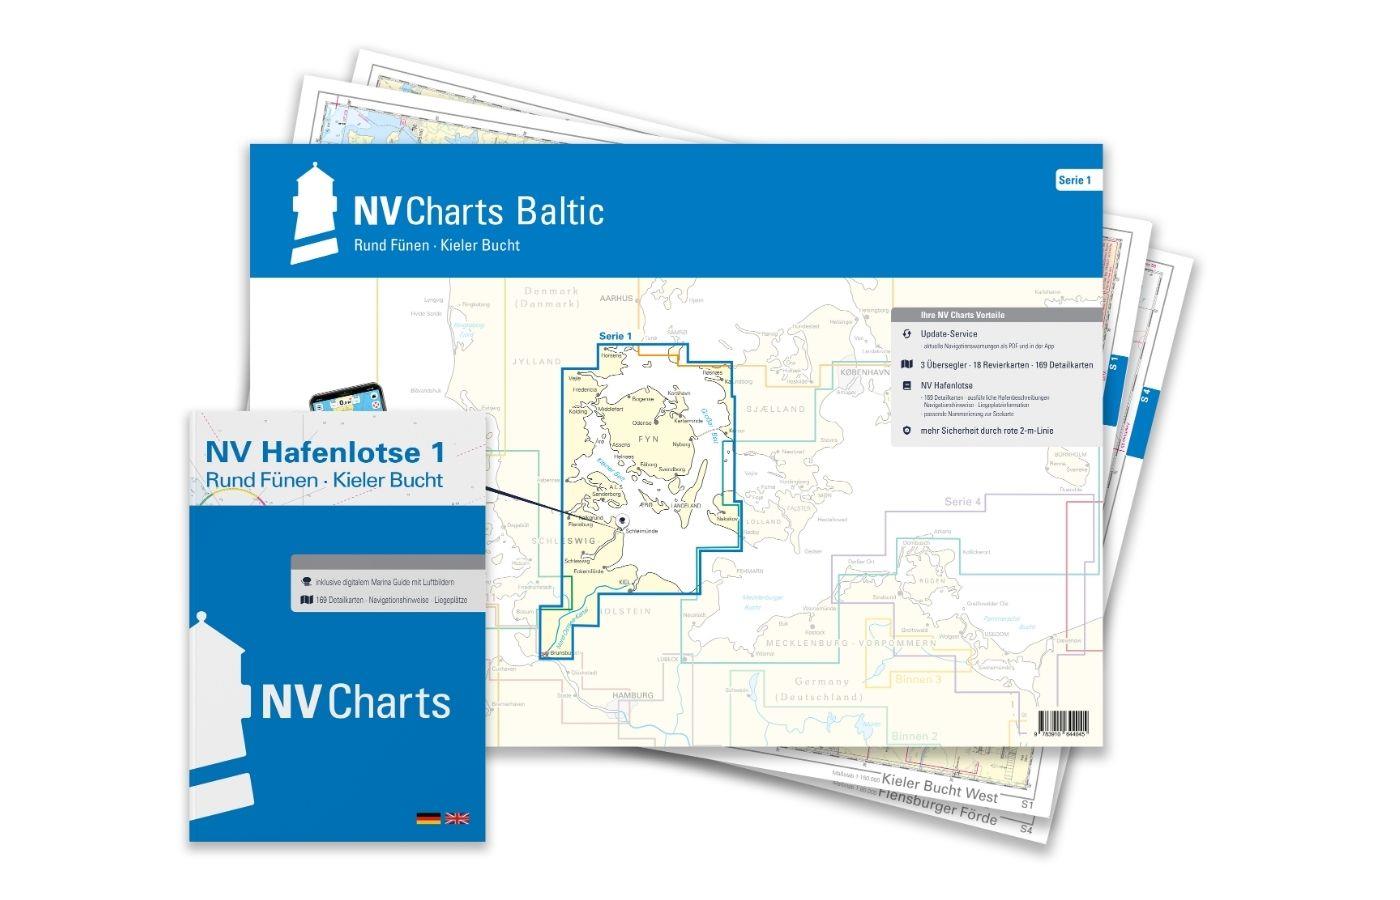 Subscription - NV Charts Baltic Region 1 Plano North Germany South Denmark